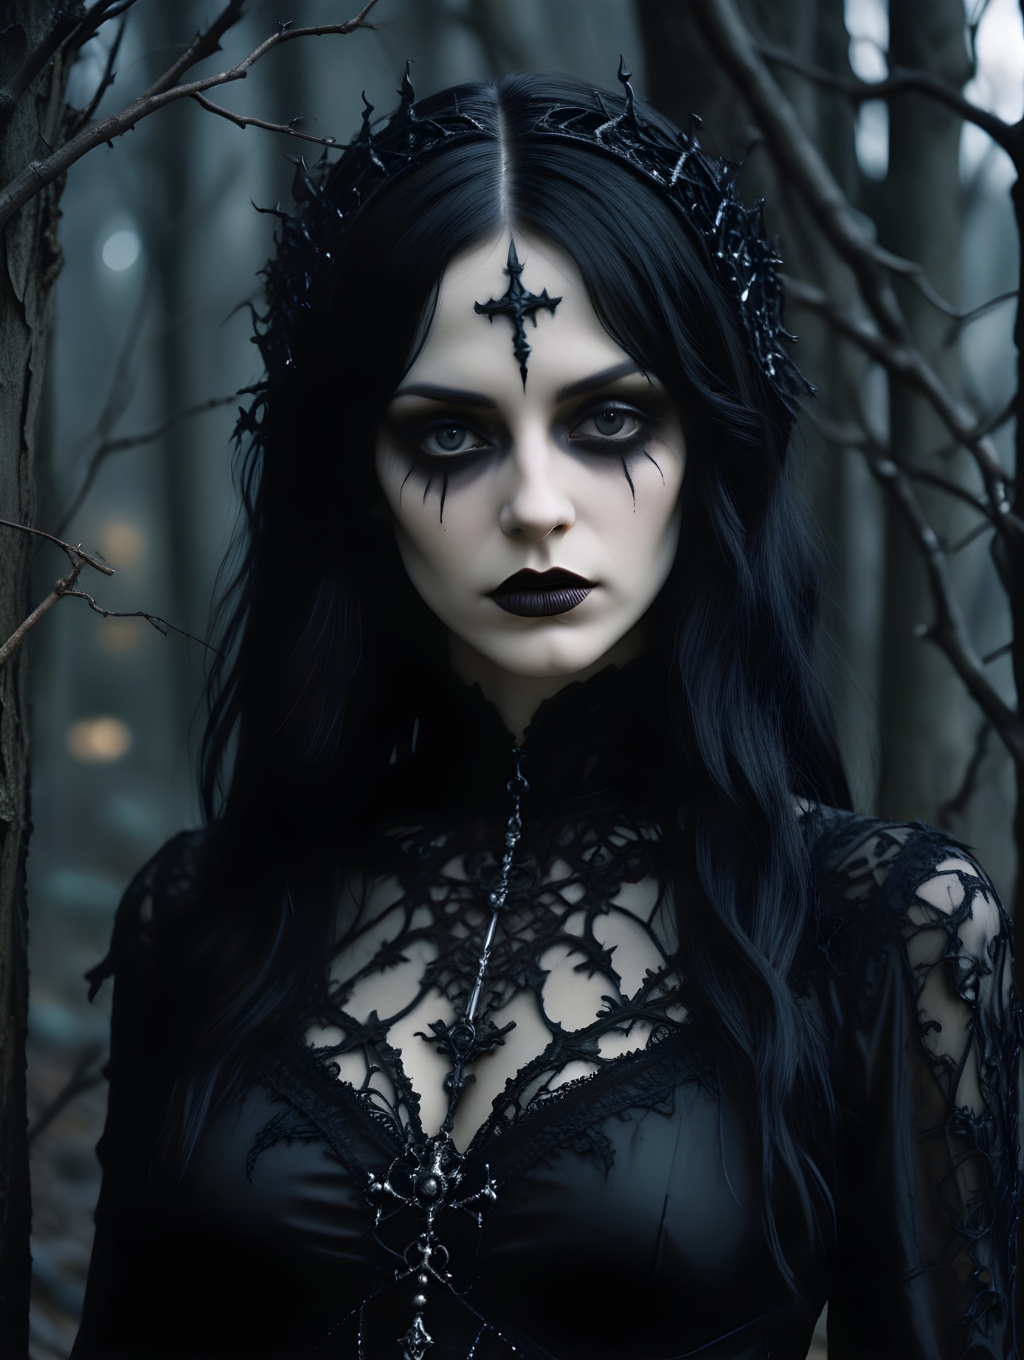 Gothic Art Women: Image Frames & Self-Portraits-Theme:2